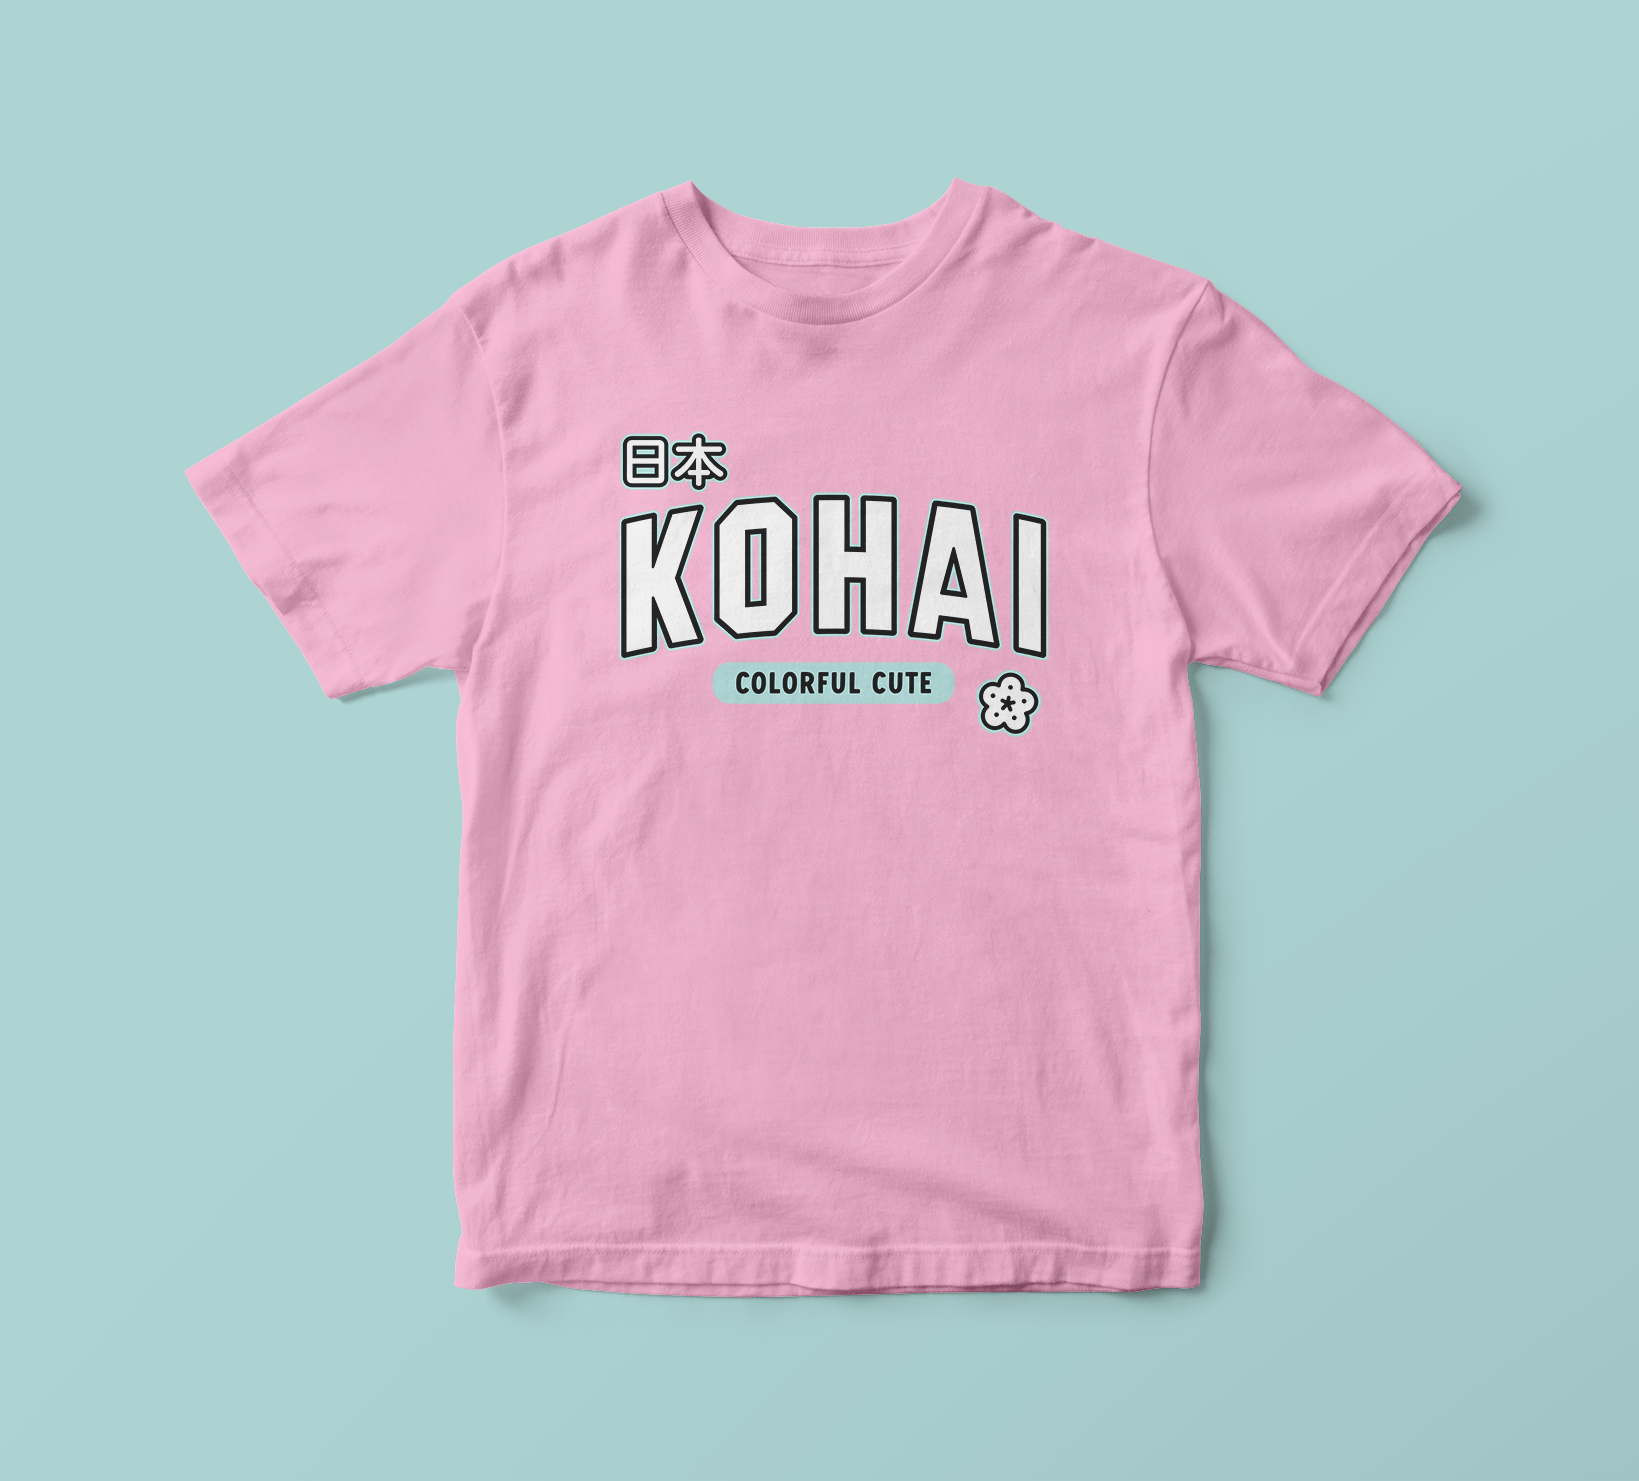 Colorful Cute Kohai Shirt